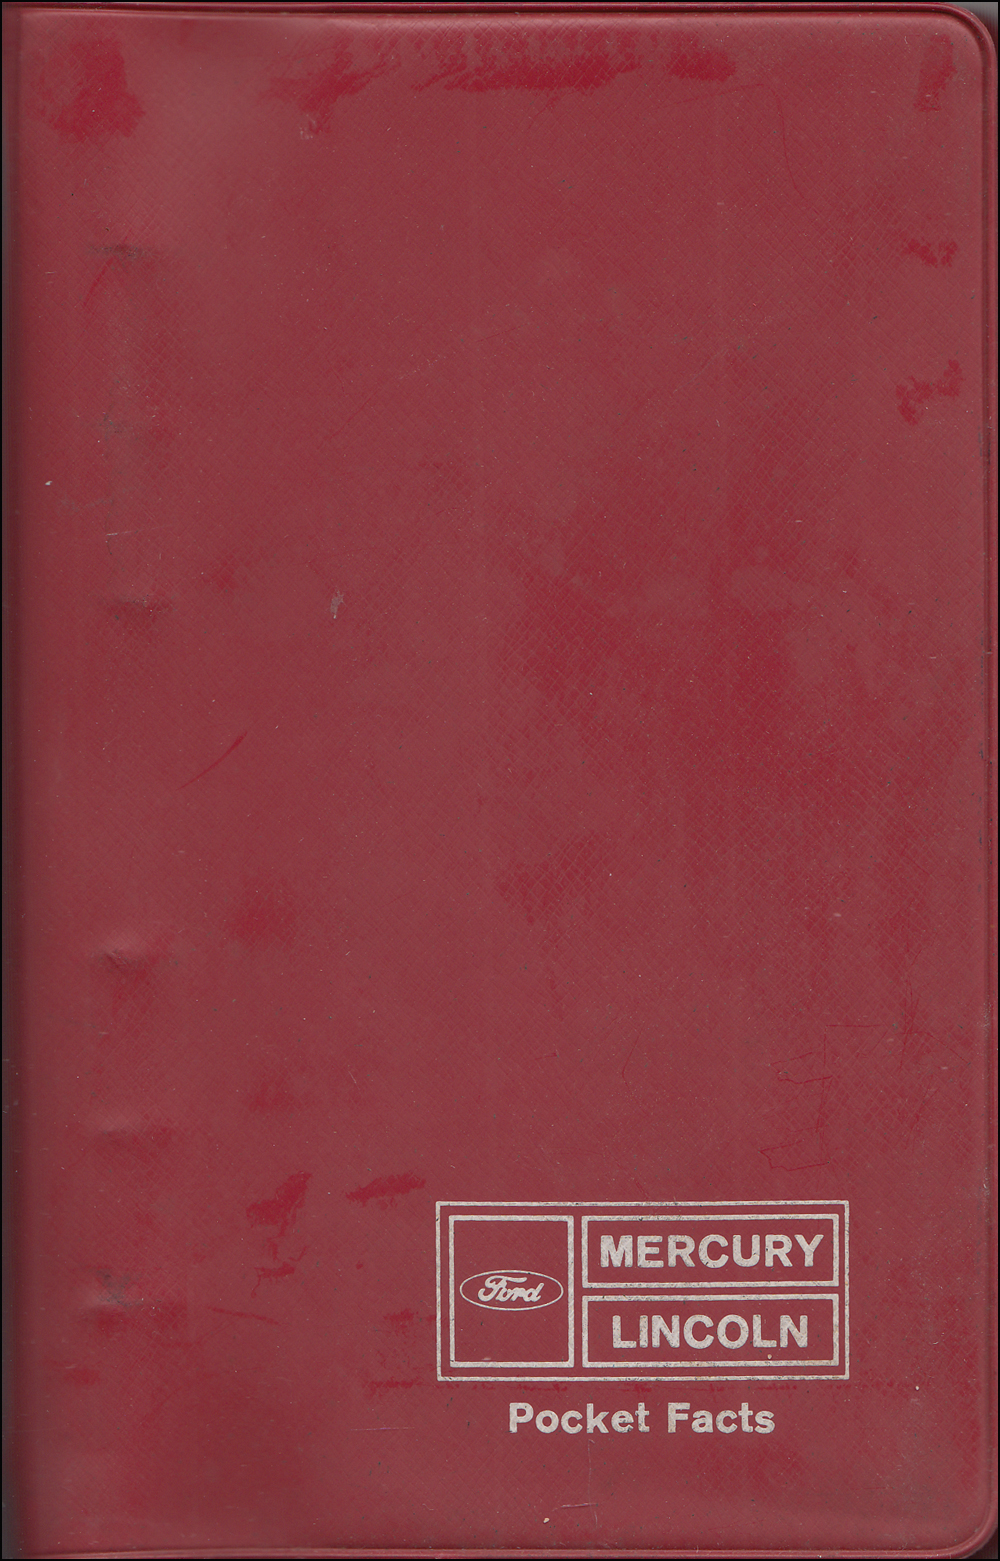 1968 Lincoln/Mercury Pocket Facts Book Original